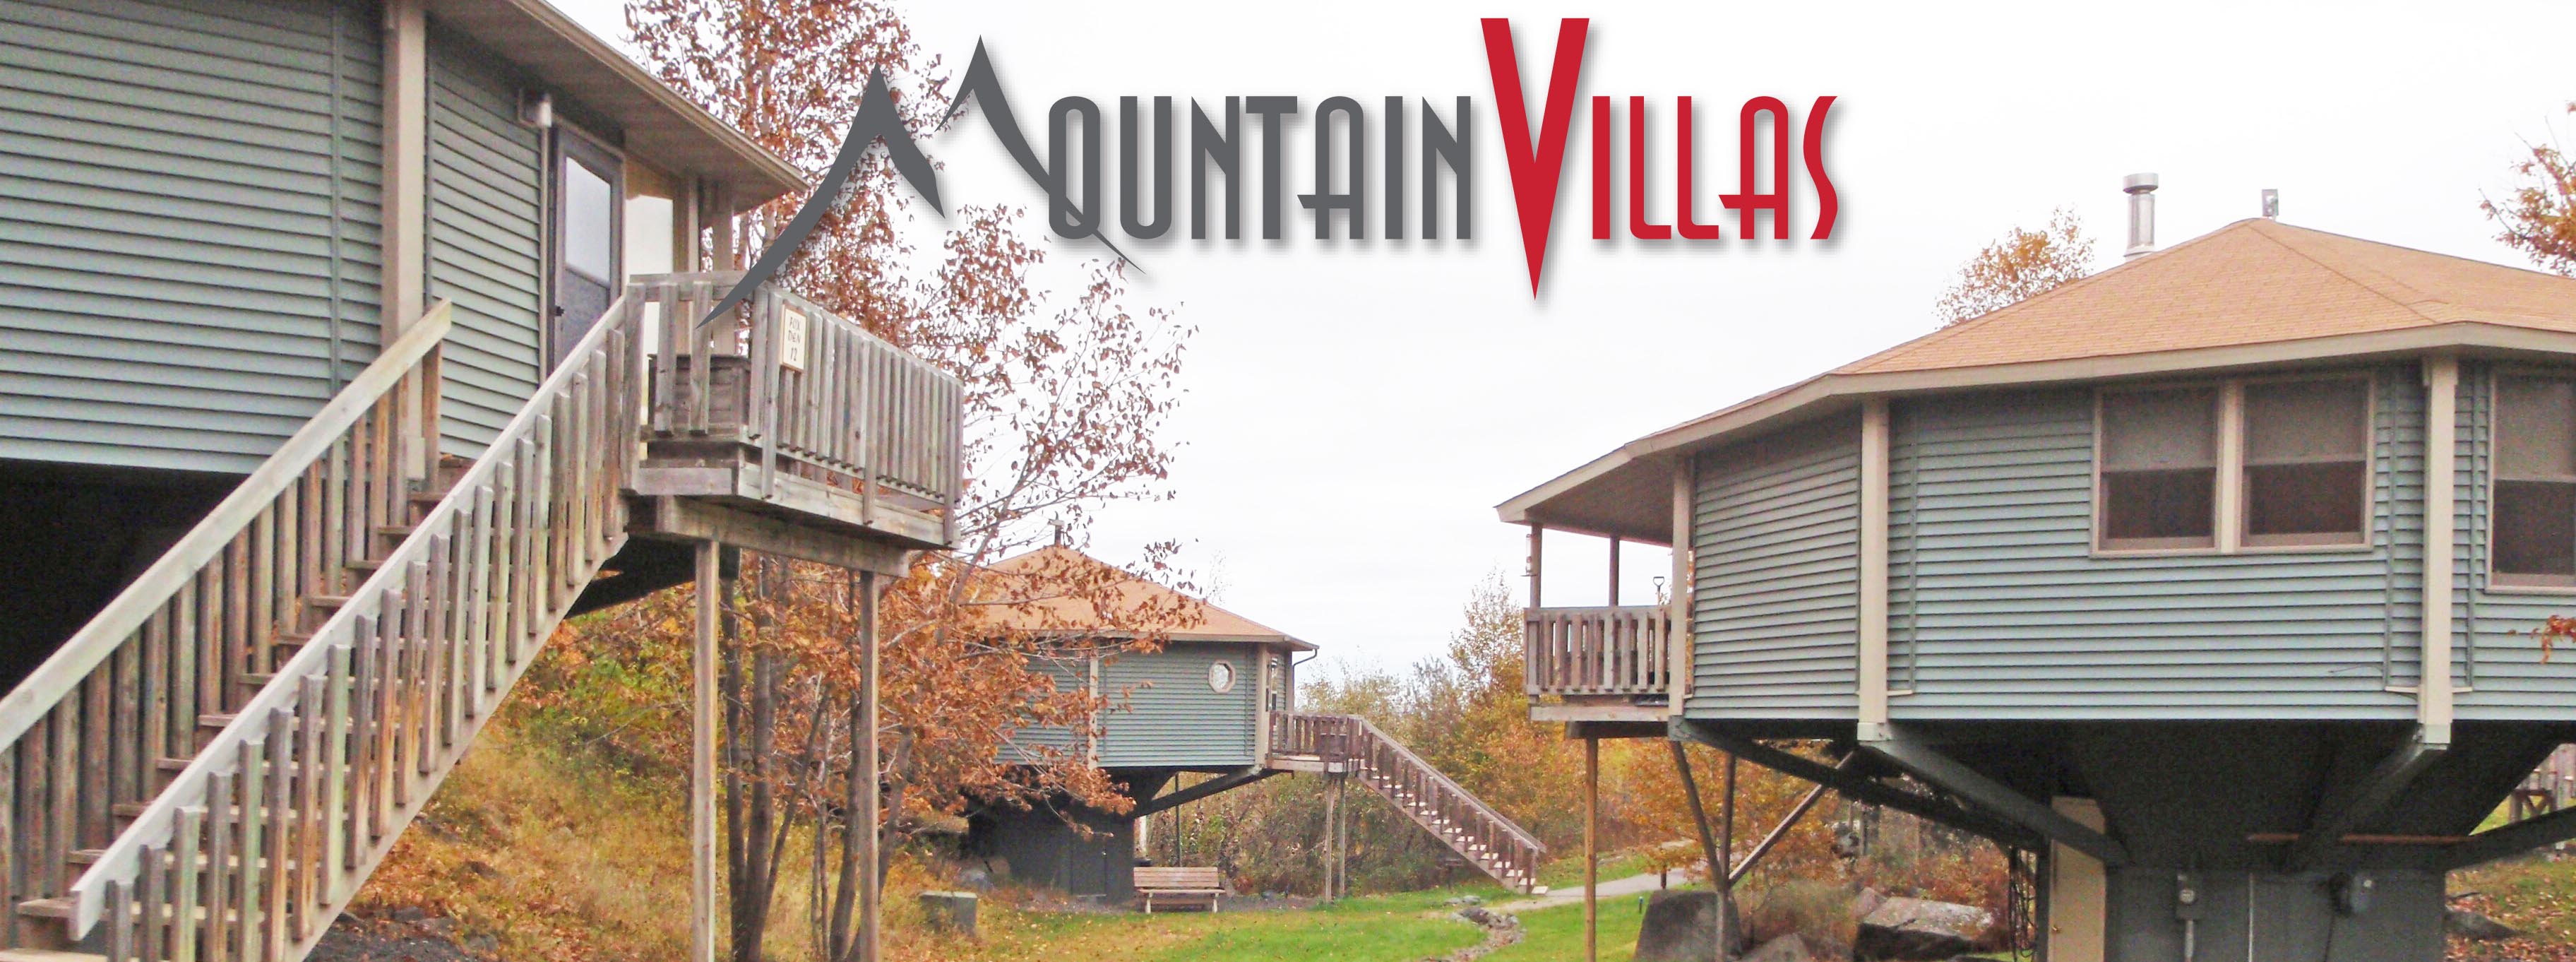 The villas at Mountain Villas are all individual units